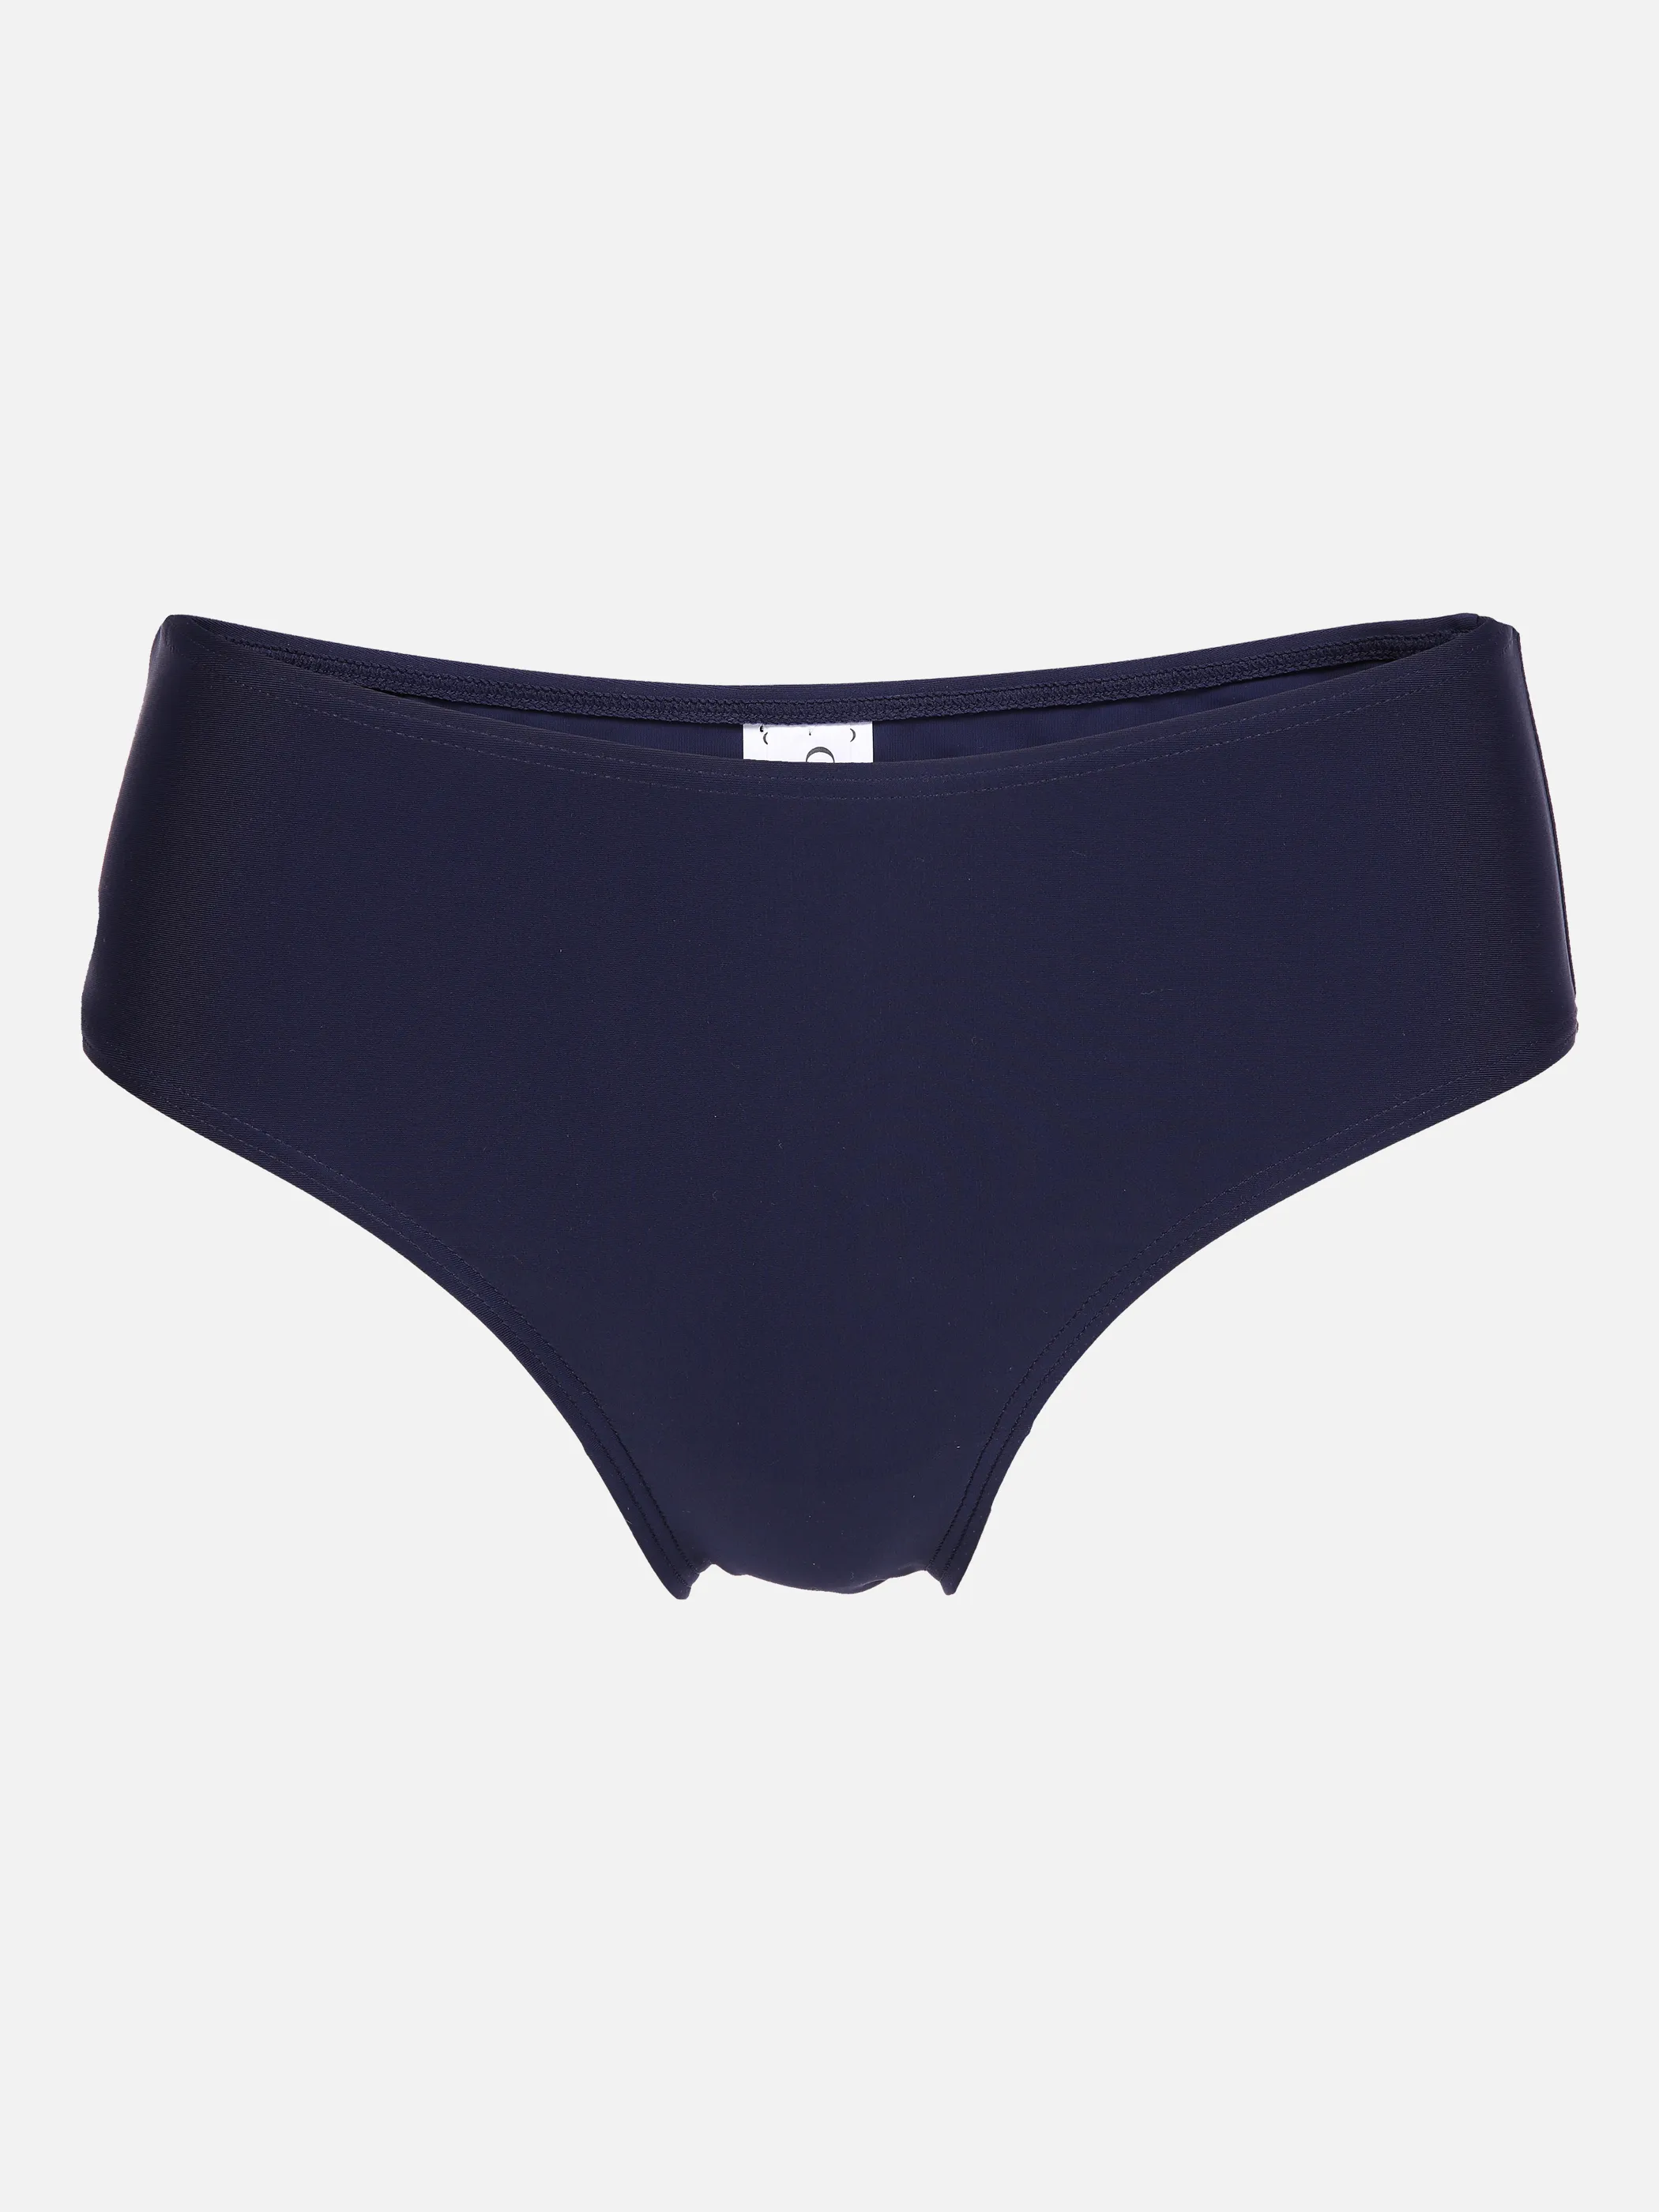 Grinario Sports Da-Bikini-Hose Blau 863019 NAVY NAVY 1